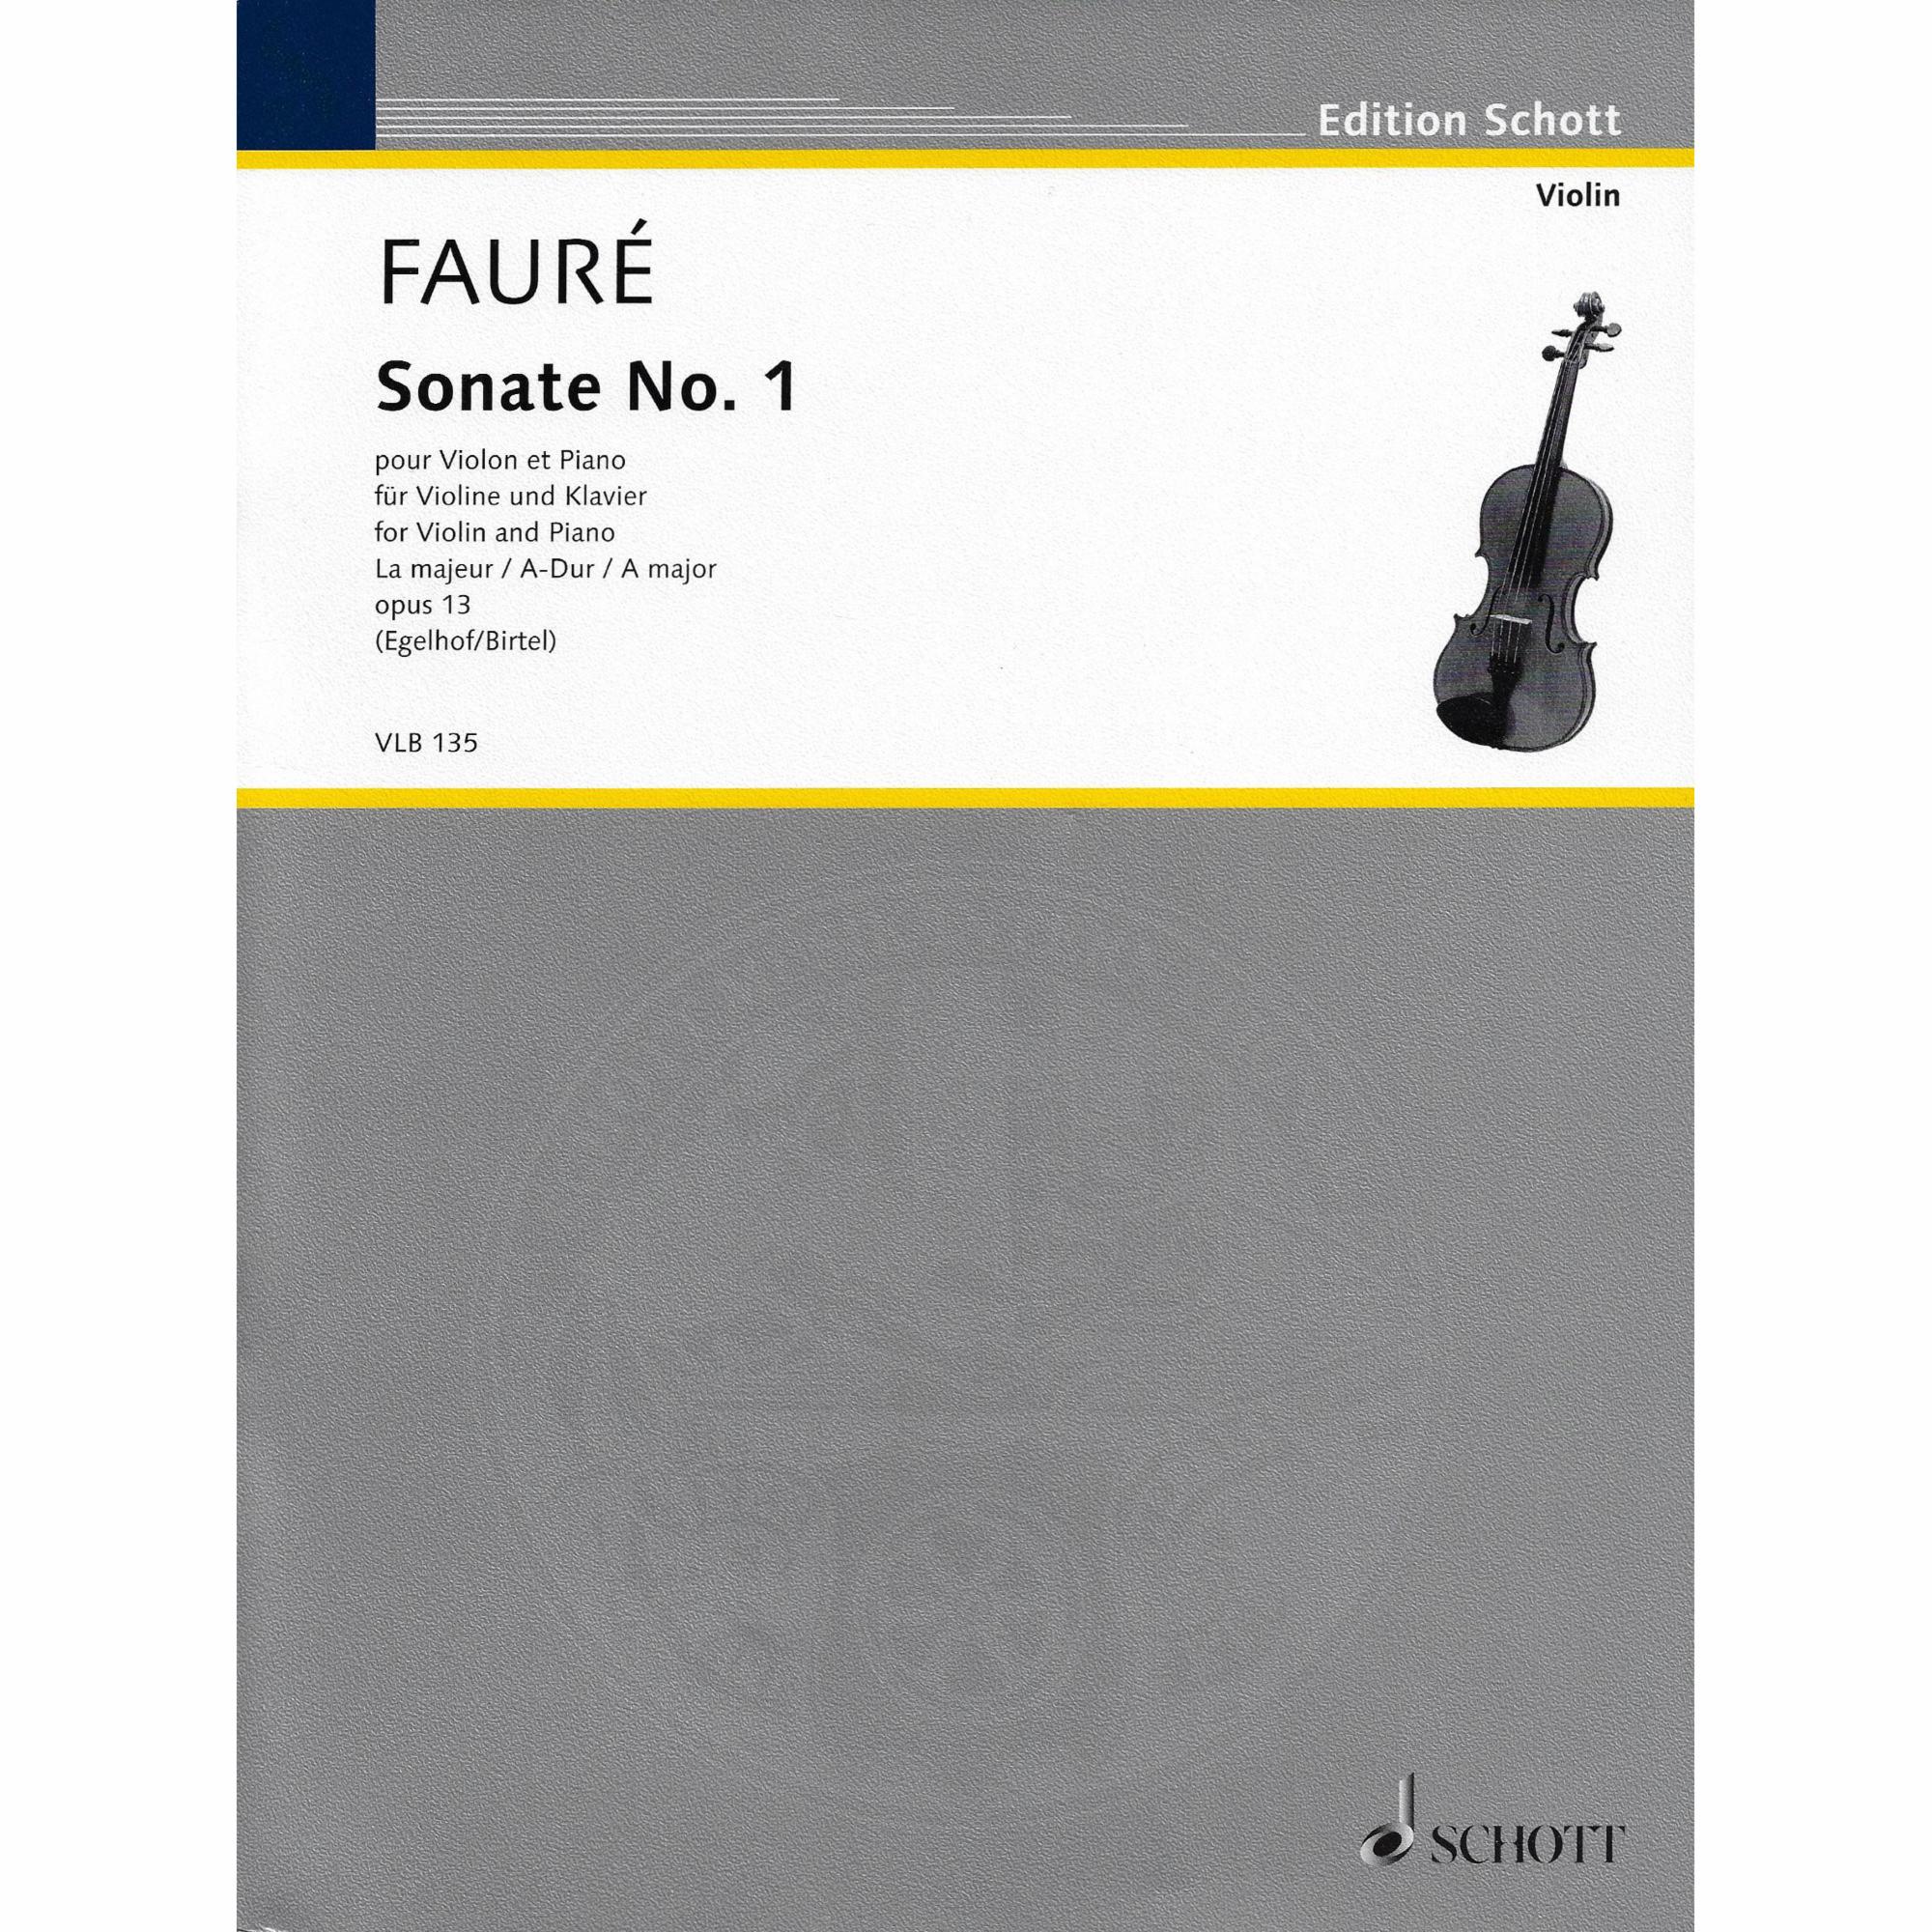 Faure -- Sonata No. 1 in A Major, Op. 13 for Violin and Piano